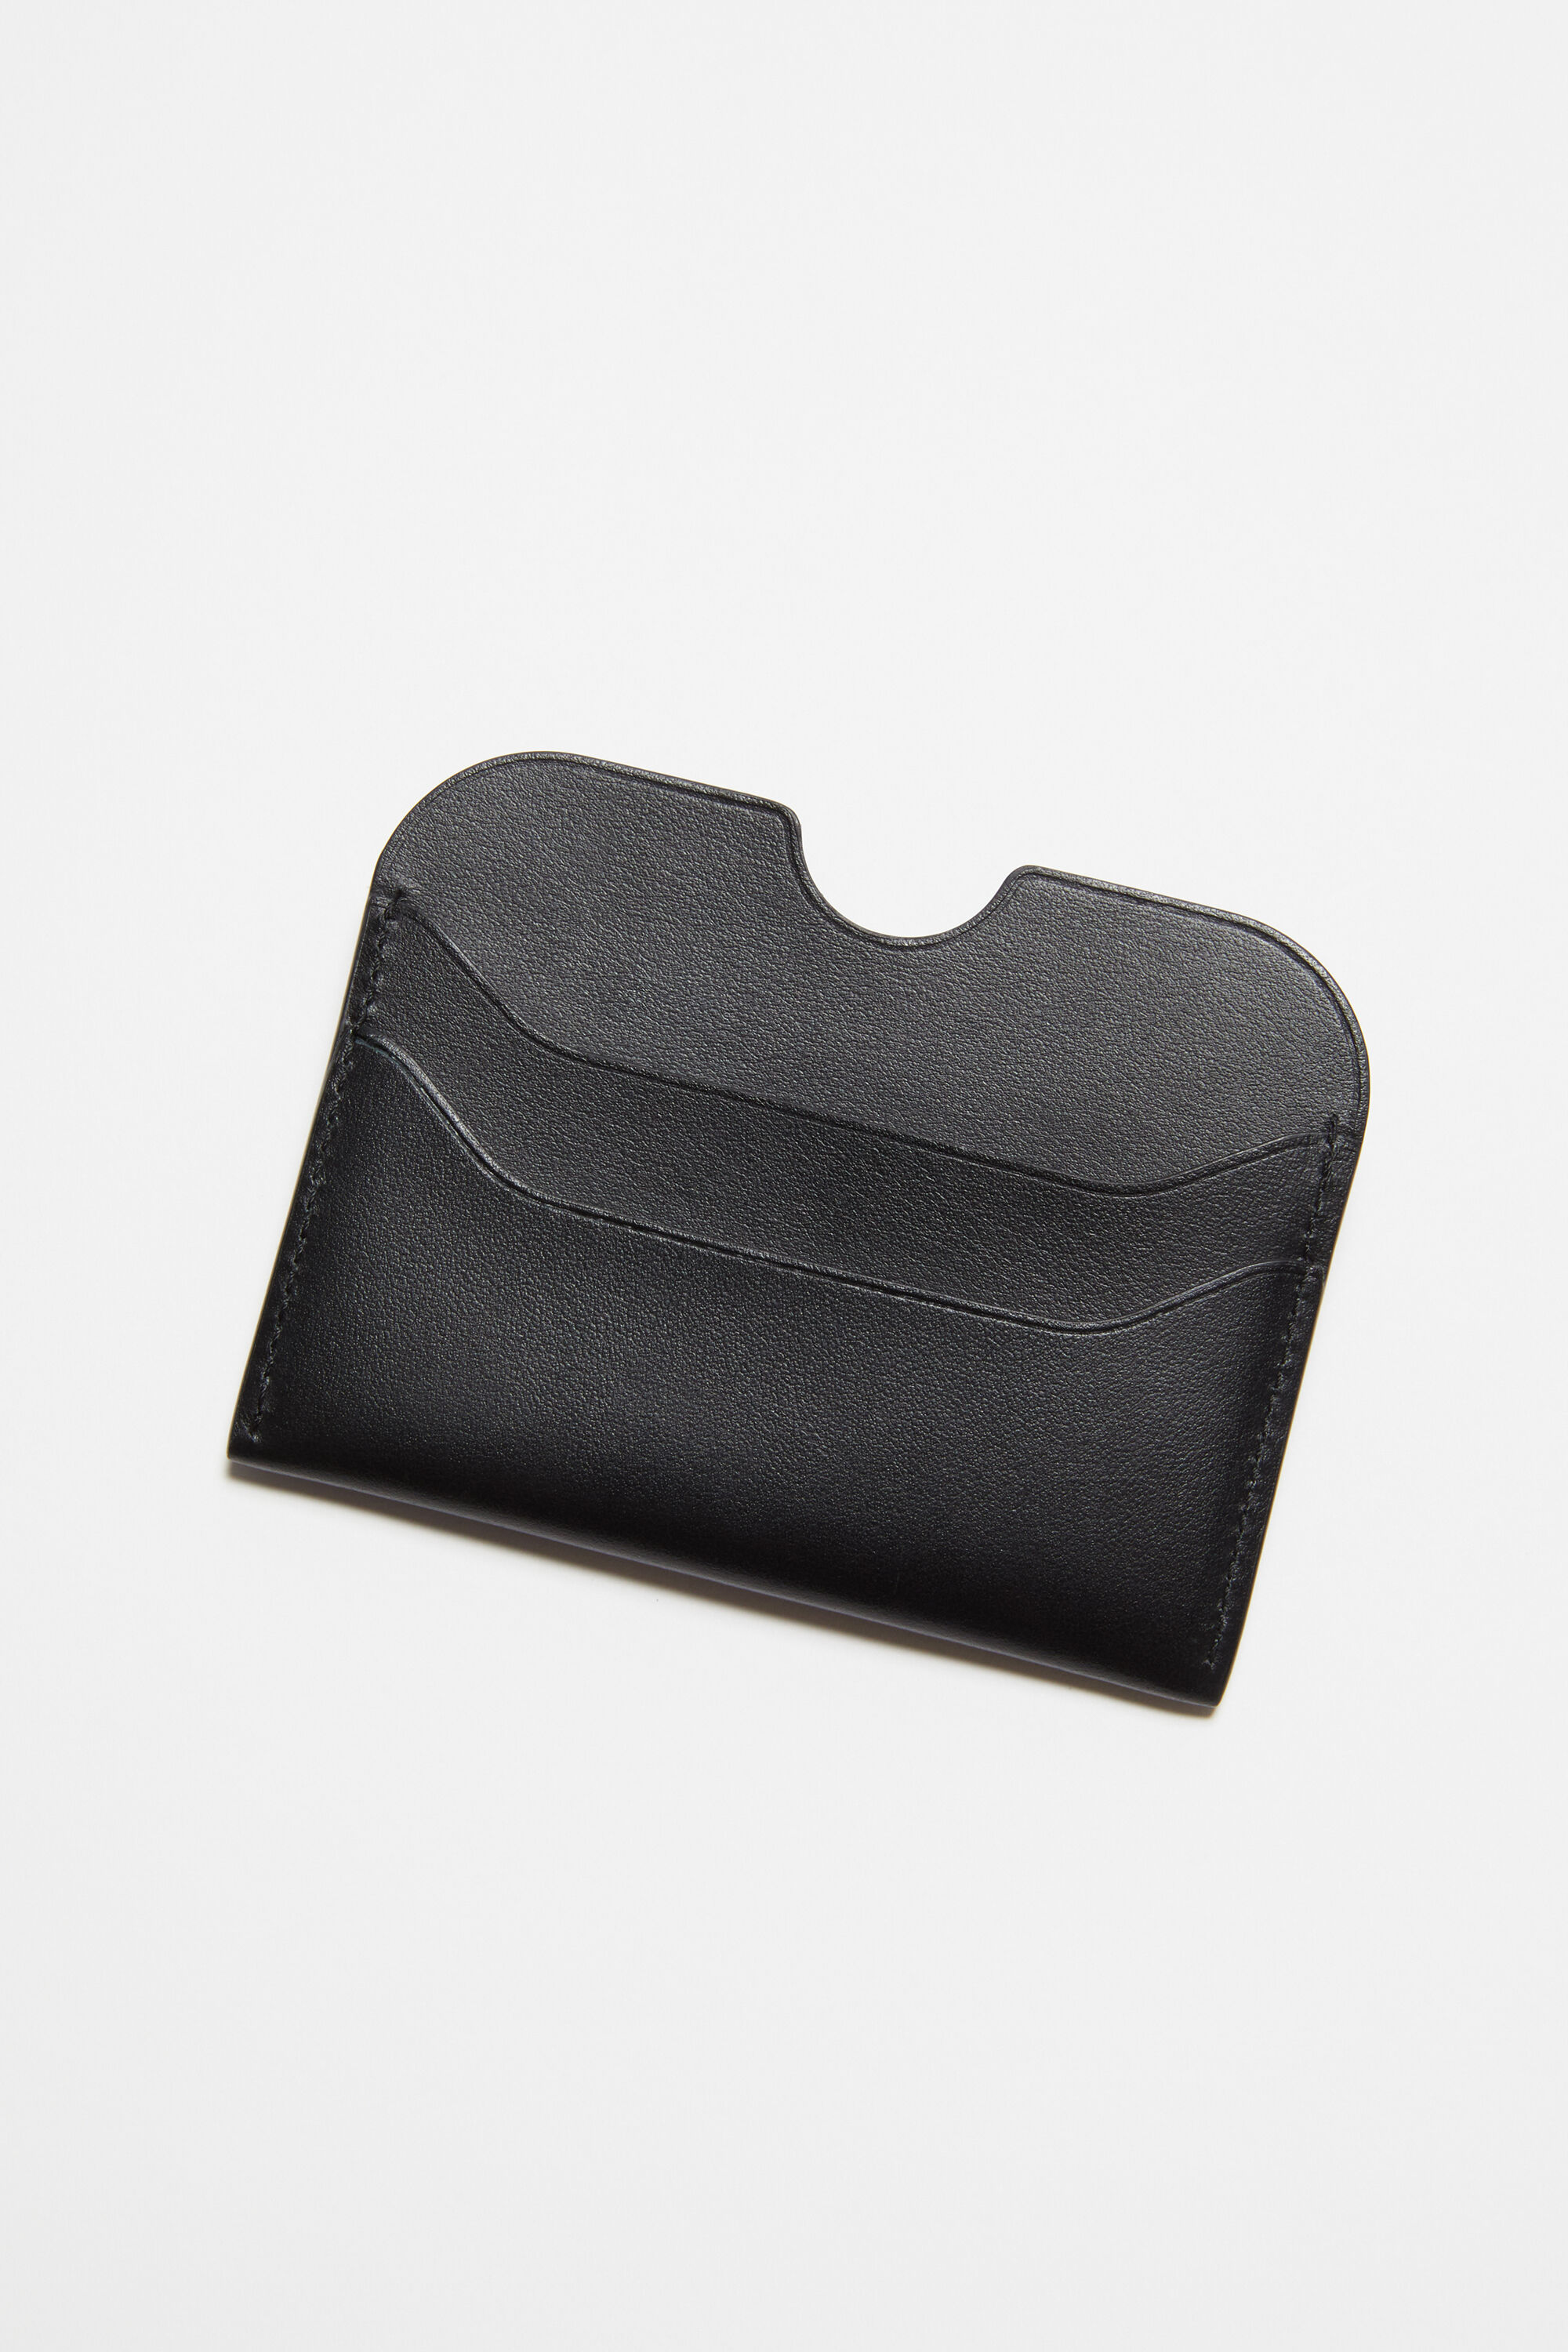 Acne Studios - Leather card holder - Black